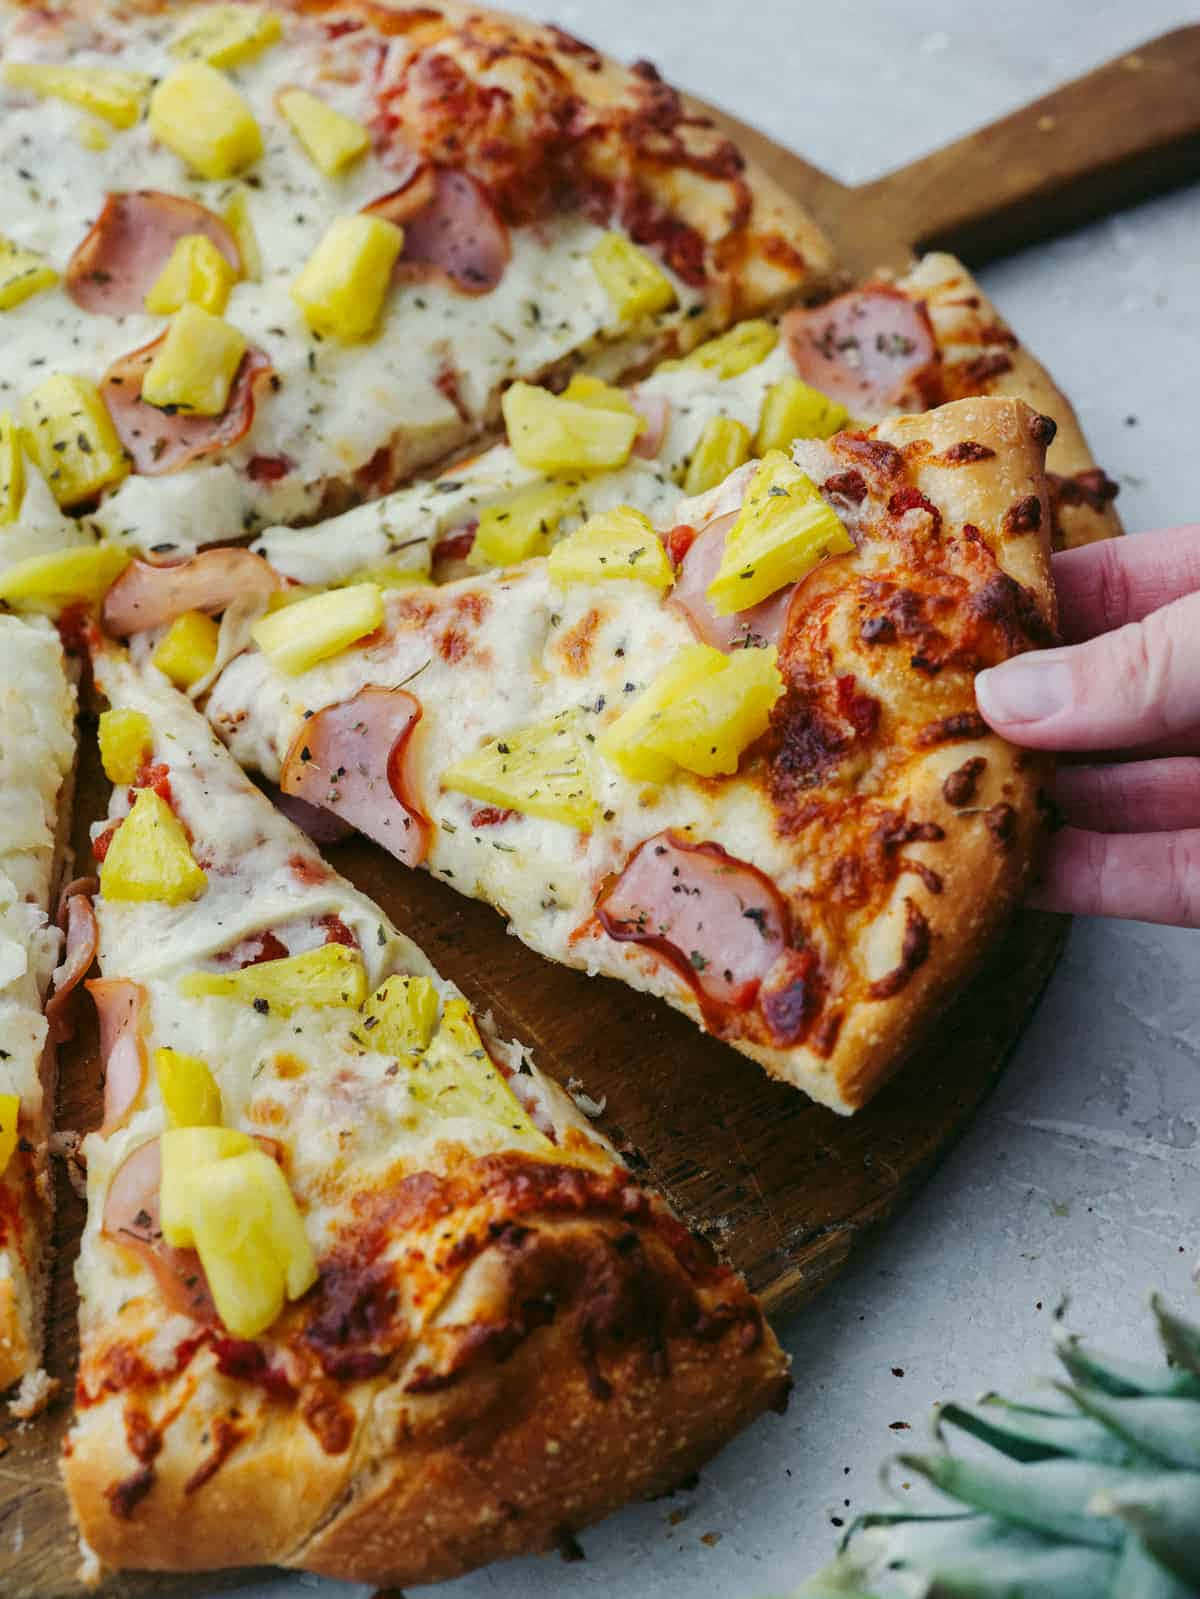 "Enjoy delicious Pizzas anytime, anywhere!”